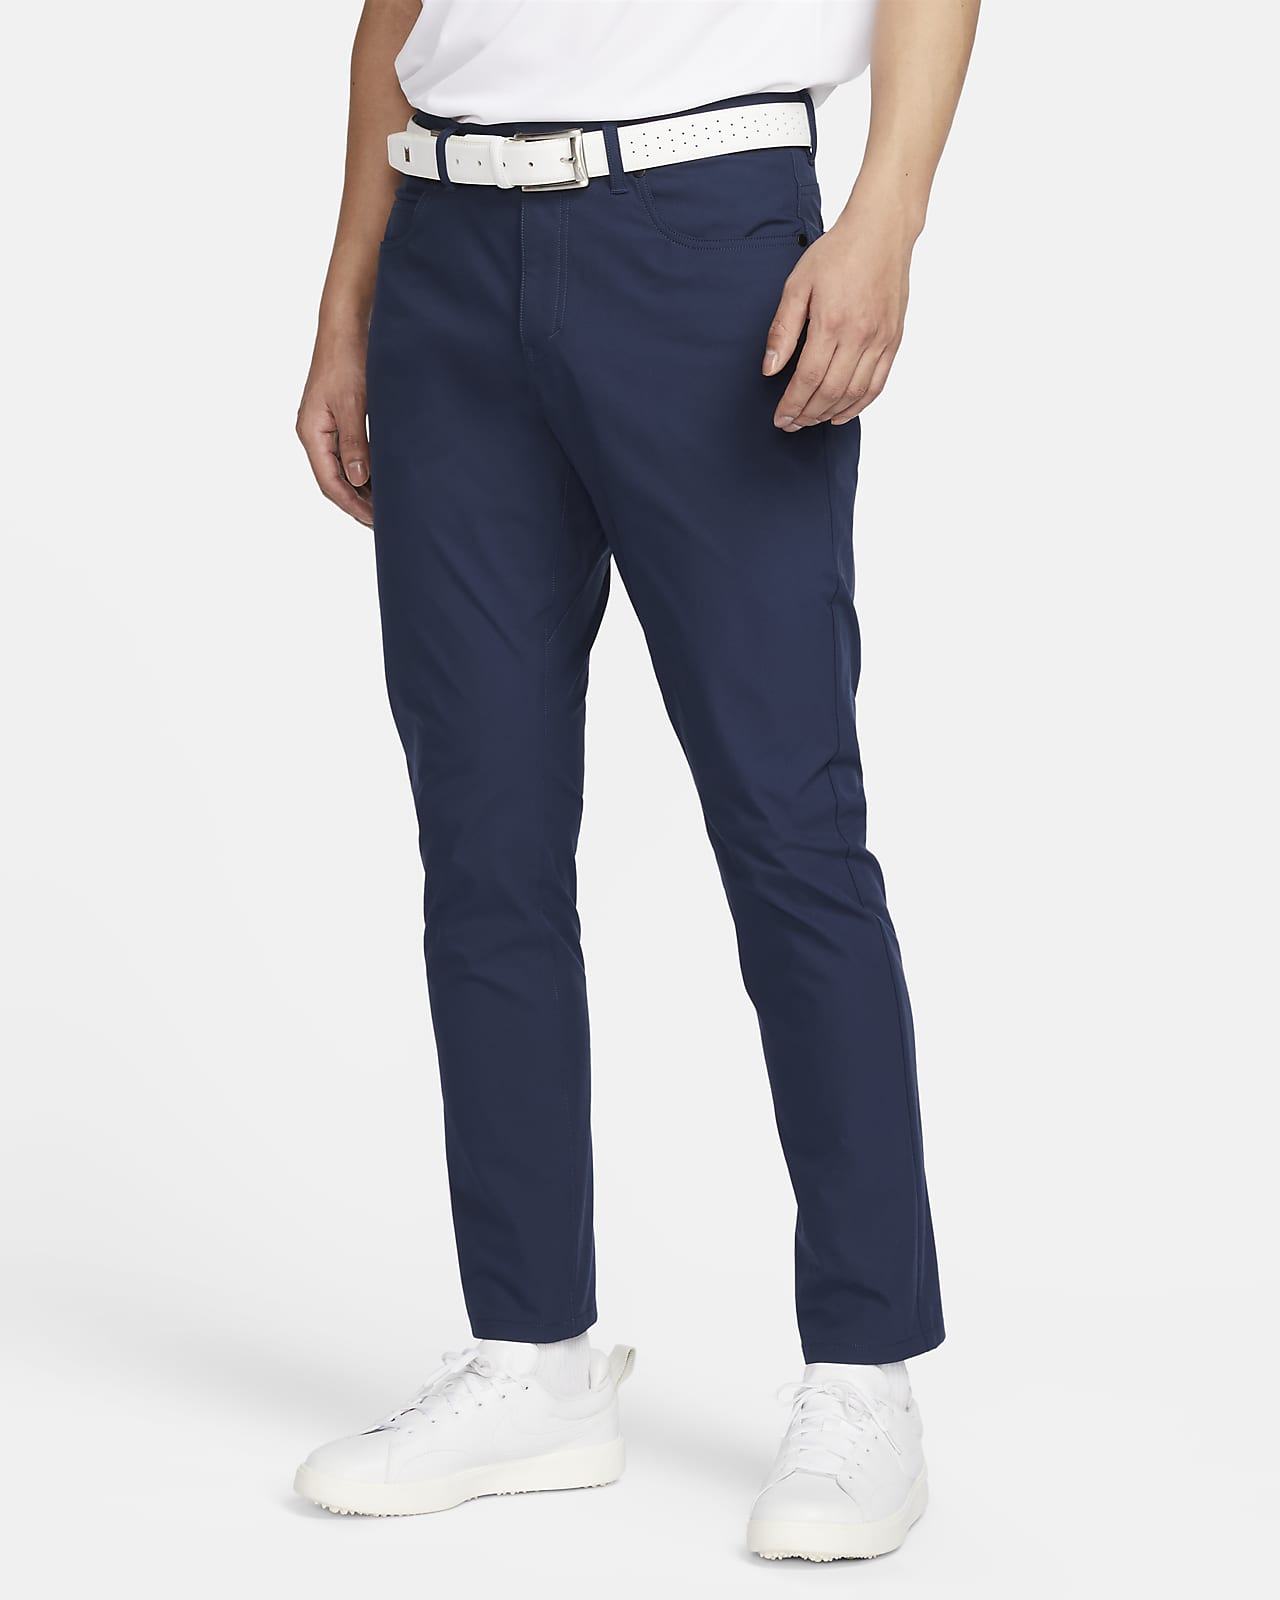 Morris James Structured 5-Pocket Trousers Khaki at CareOfCarl.com